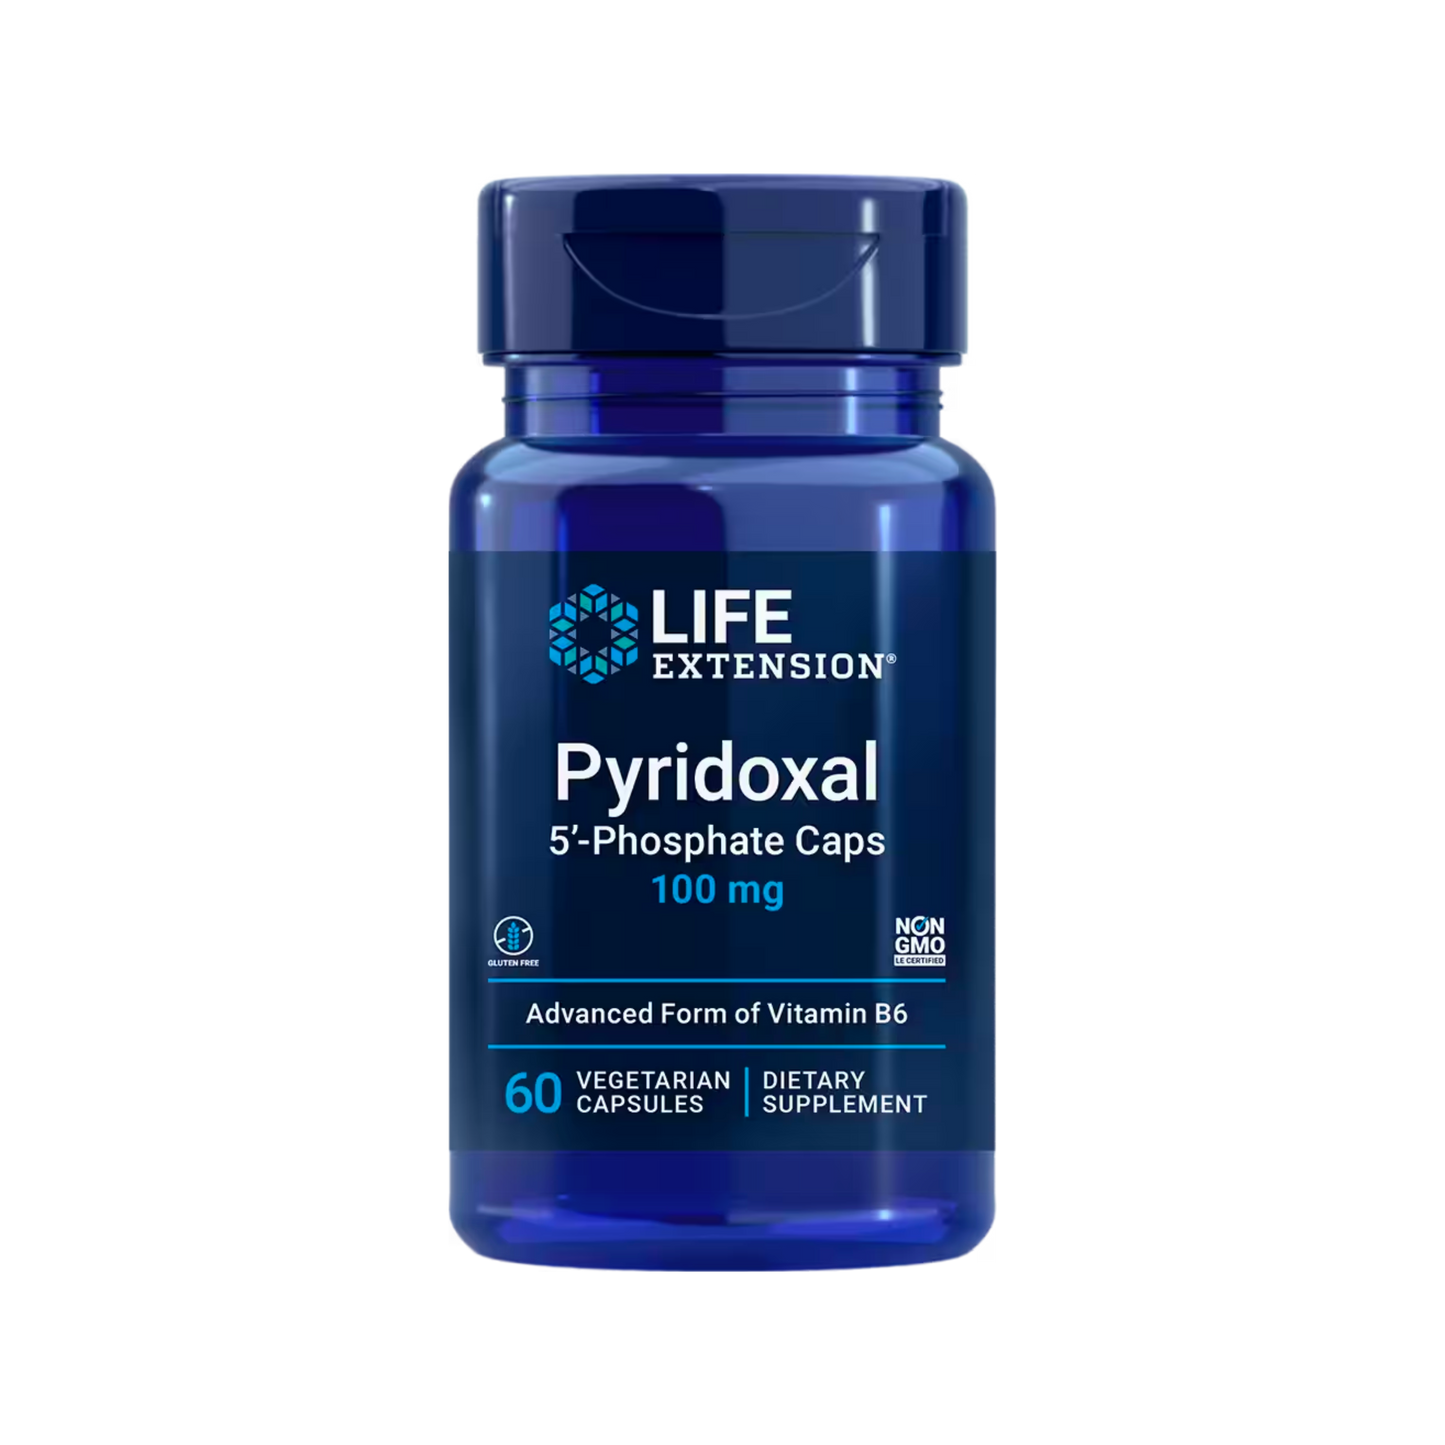 Pyridoxal 5'-Phosphate Caps